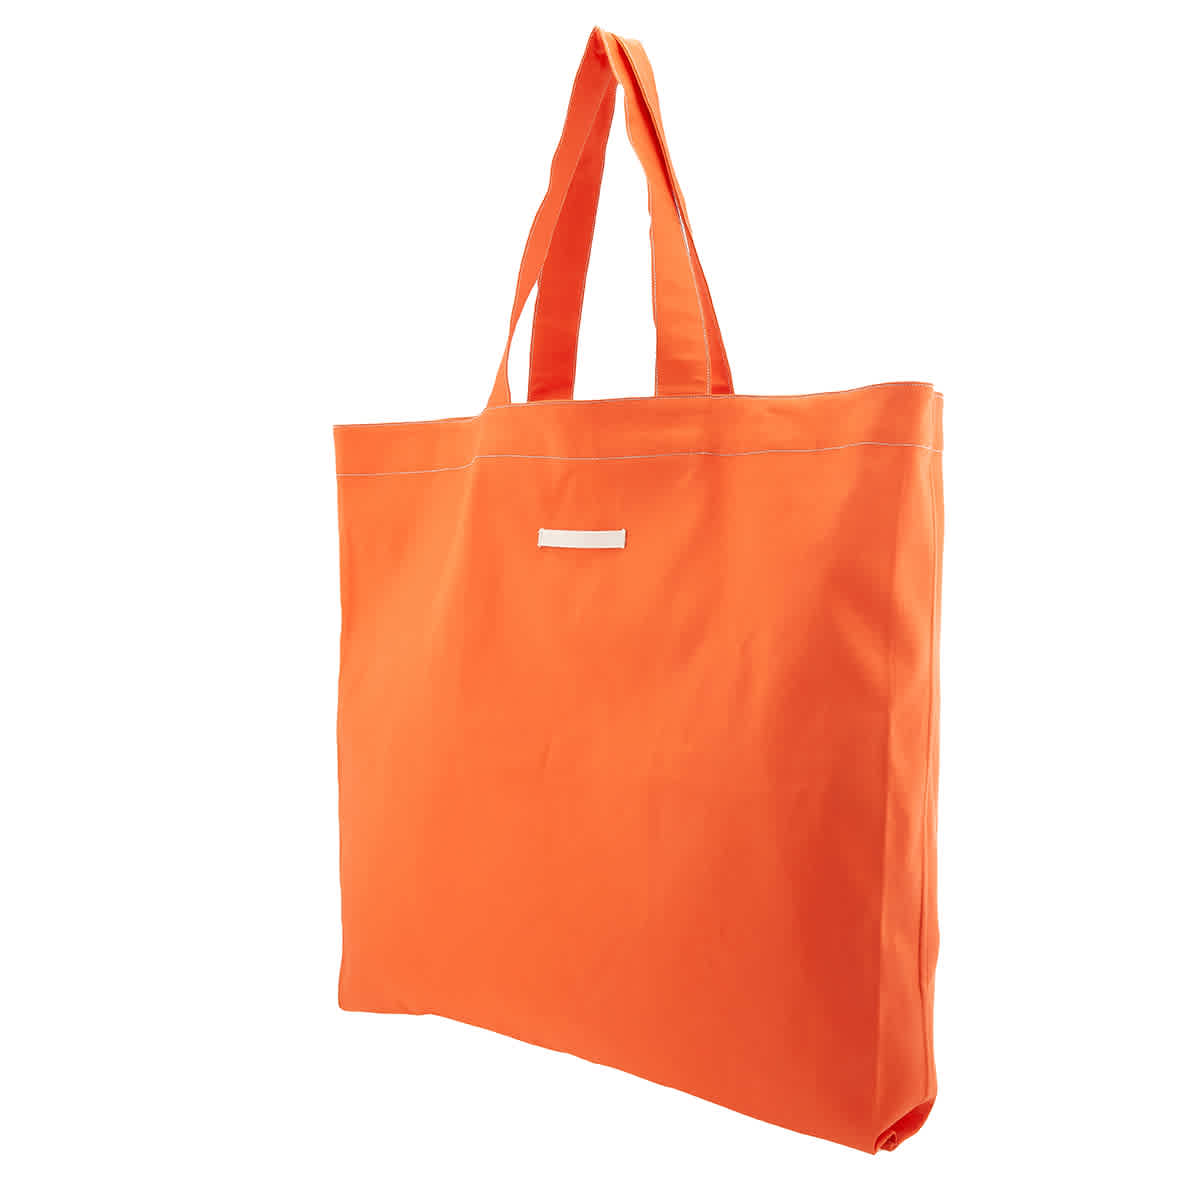 Uniforme Orange Cotton Dropper Tote Bag